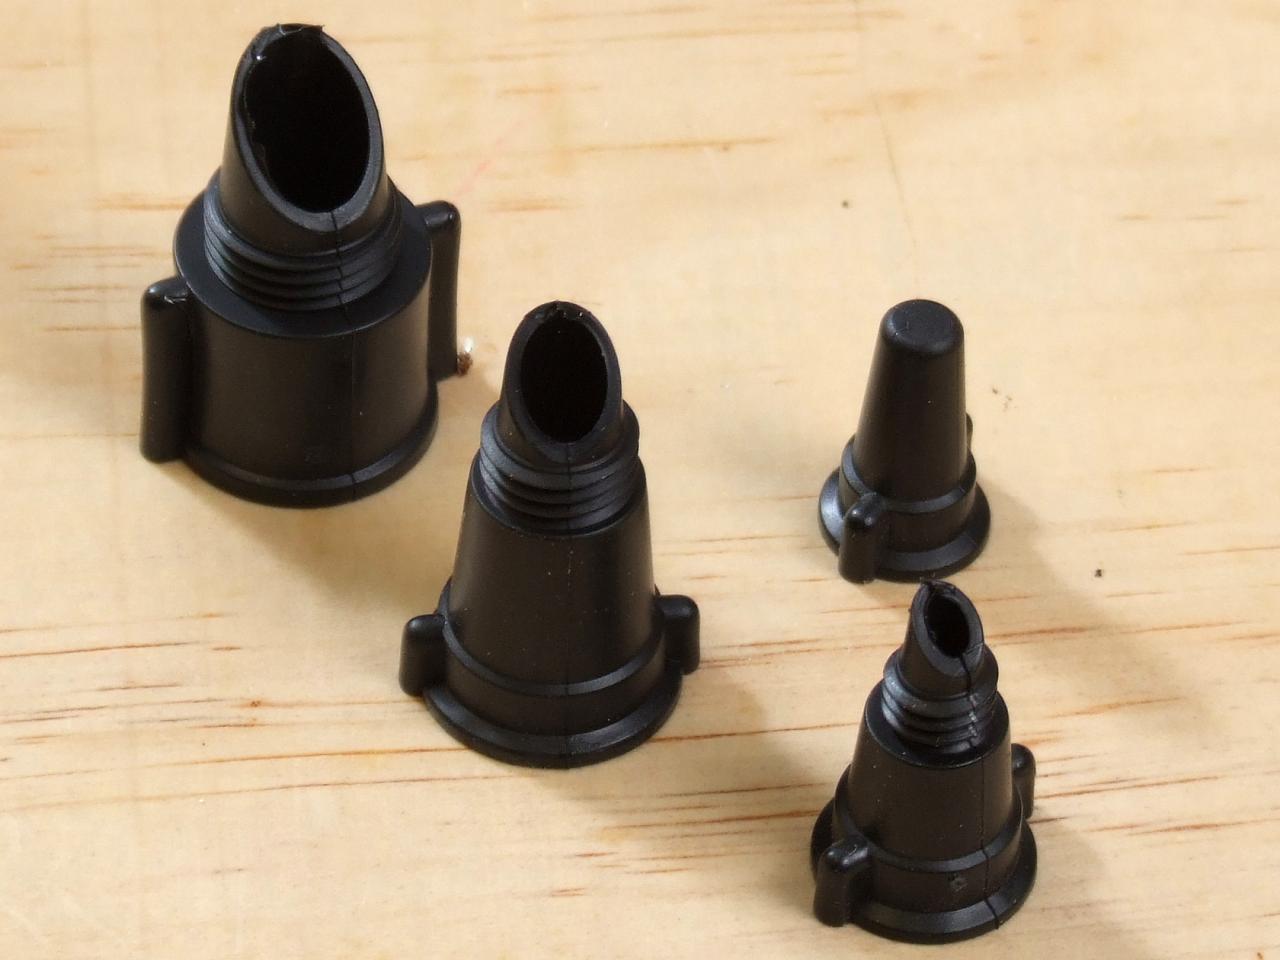 stick and seal: the basics of adhesives, glue and caulk diy